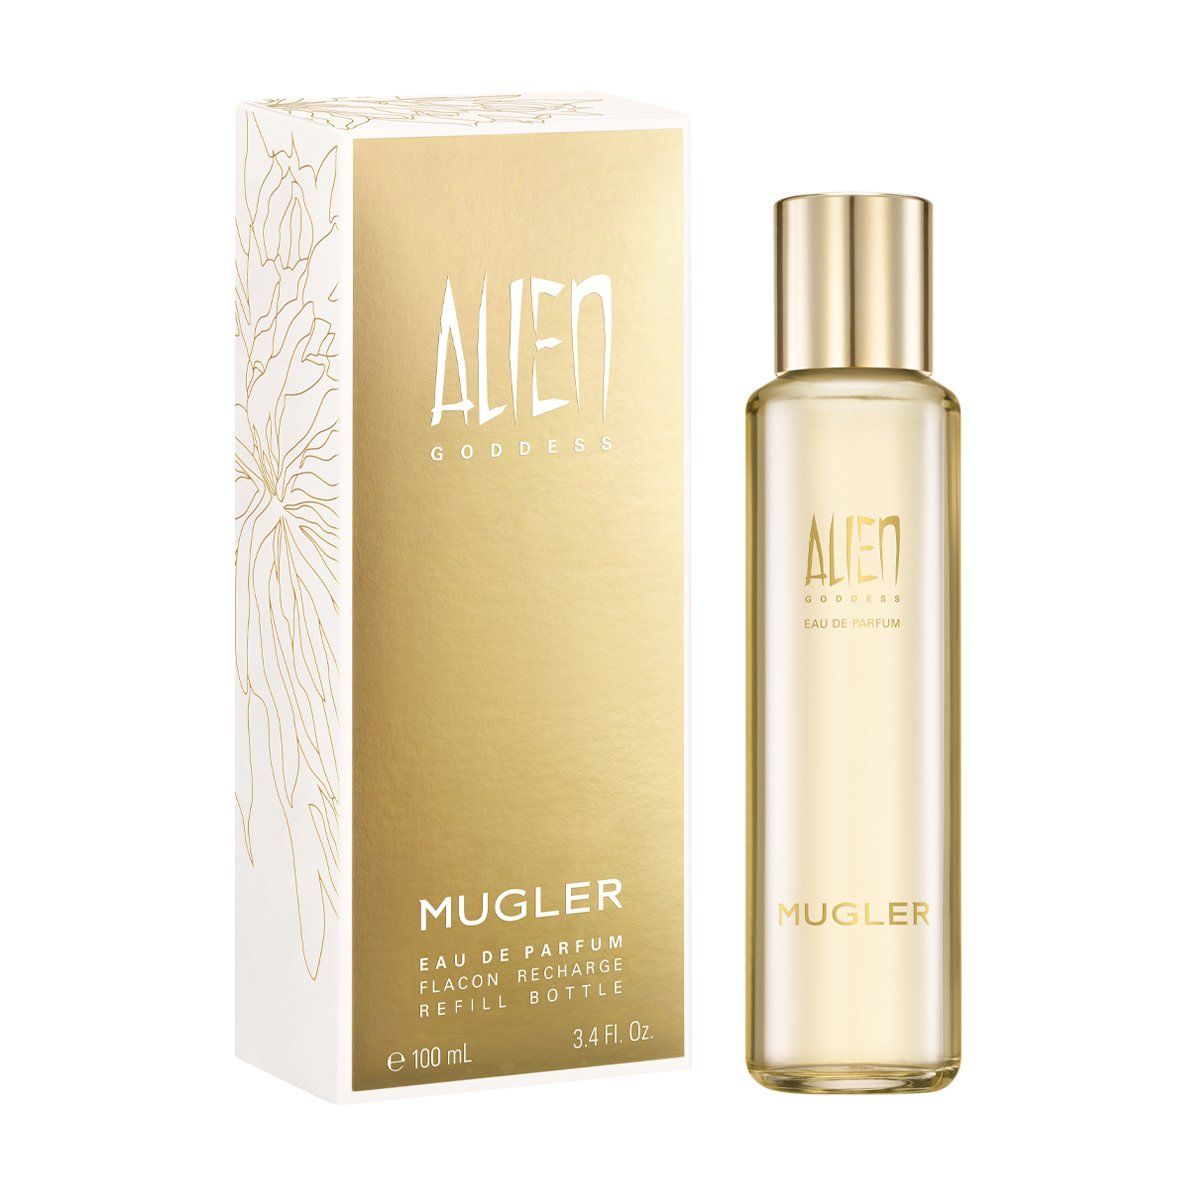 Thierry Mugler Alien Goddess EDP | My Perfume Shop Australia